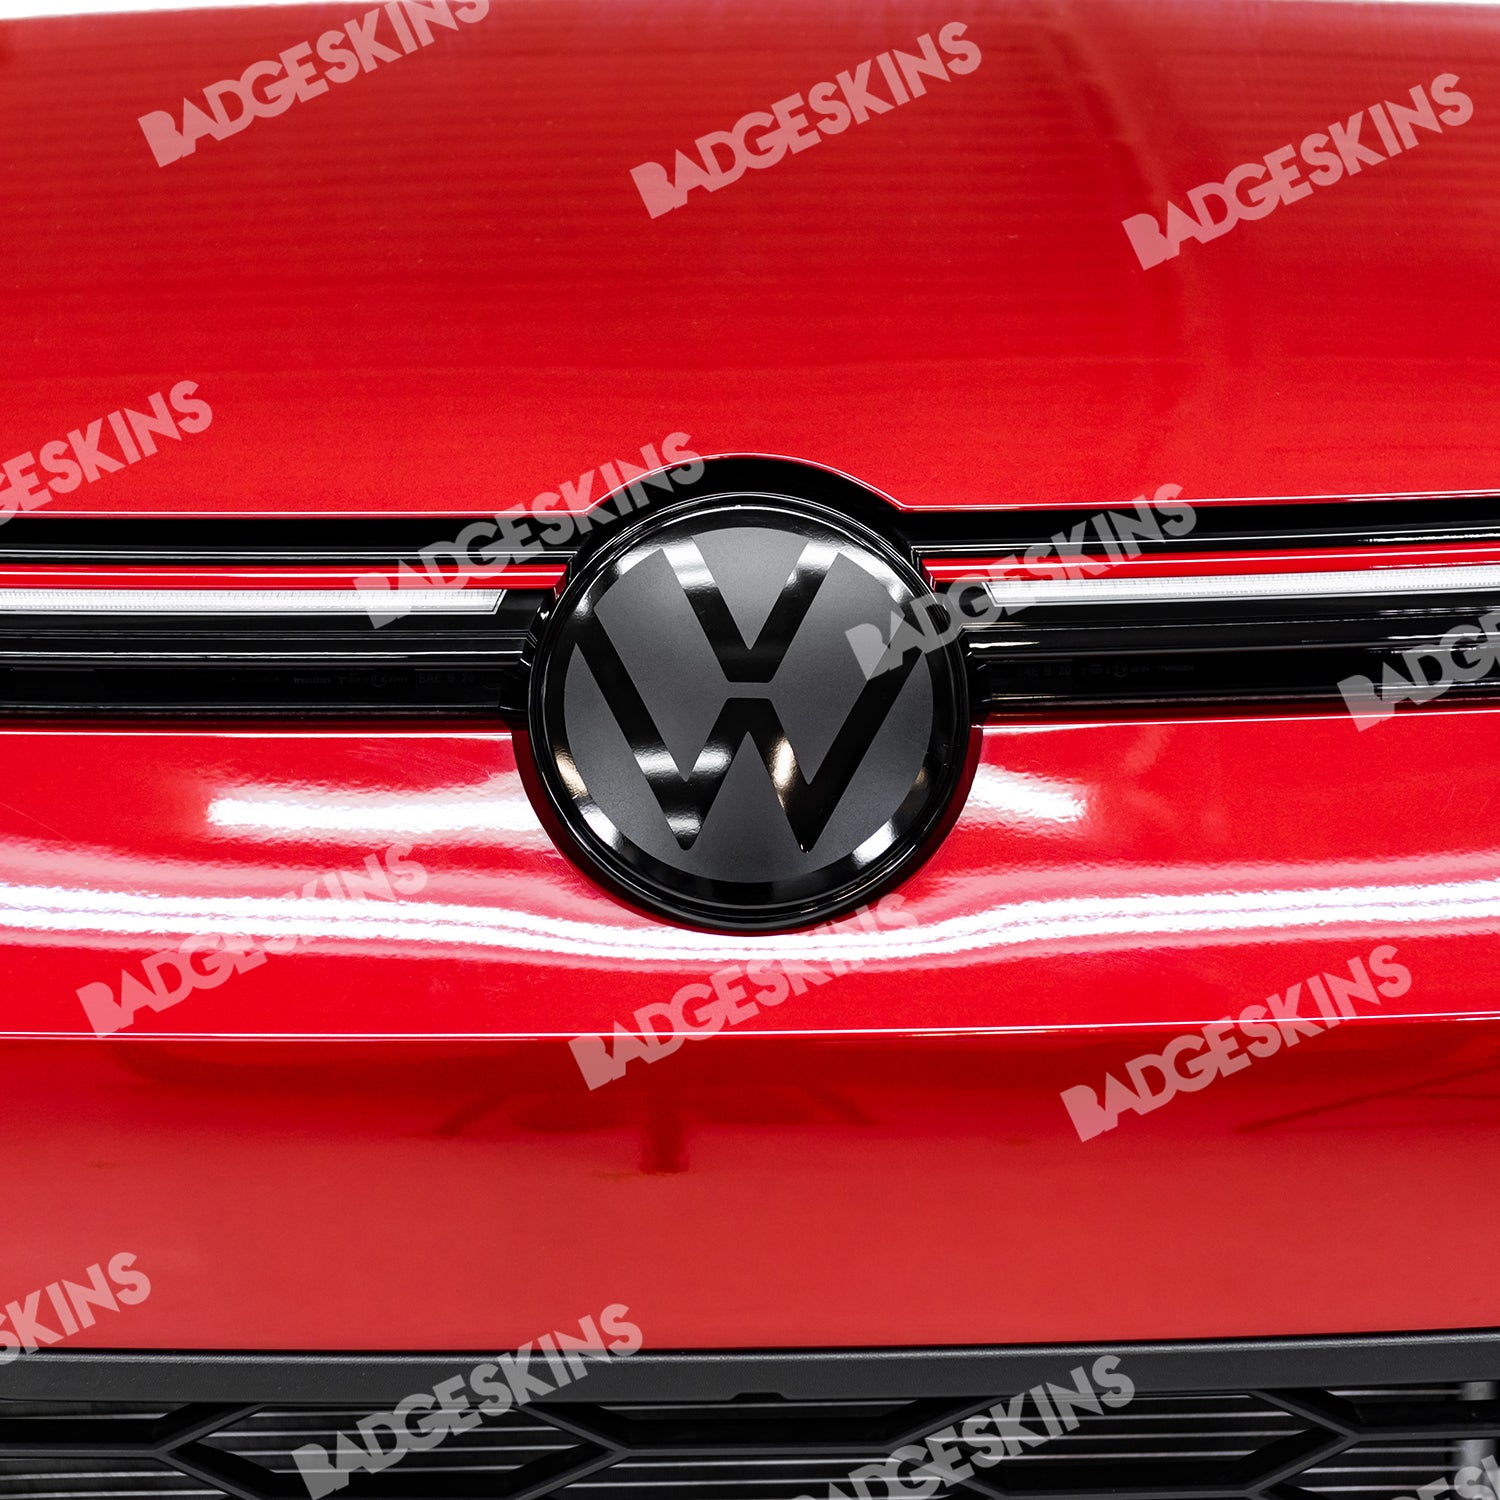 VW-MK8-Golf-FrontSmoothVWEmblemOverlayinMatte_1500x.jpg